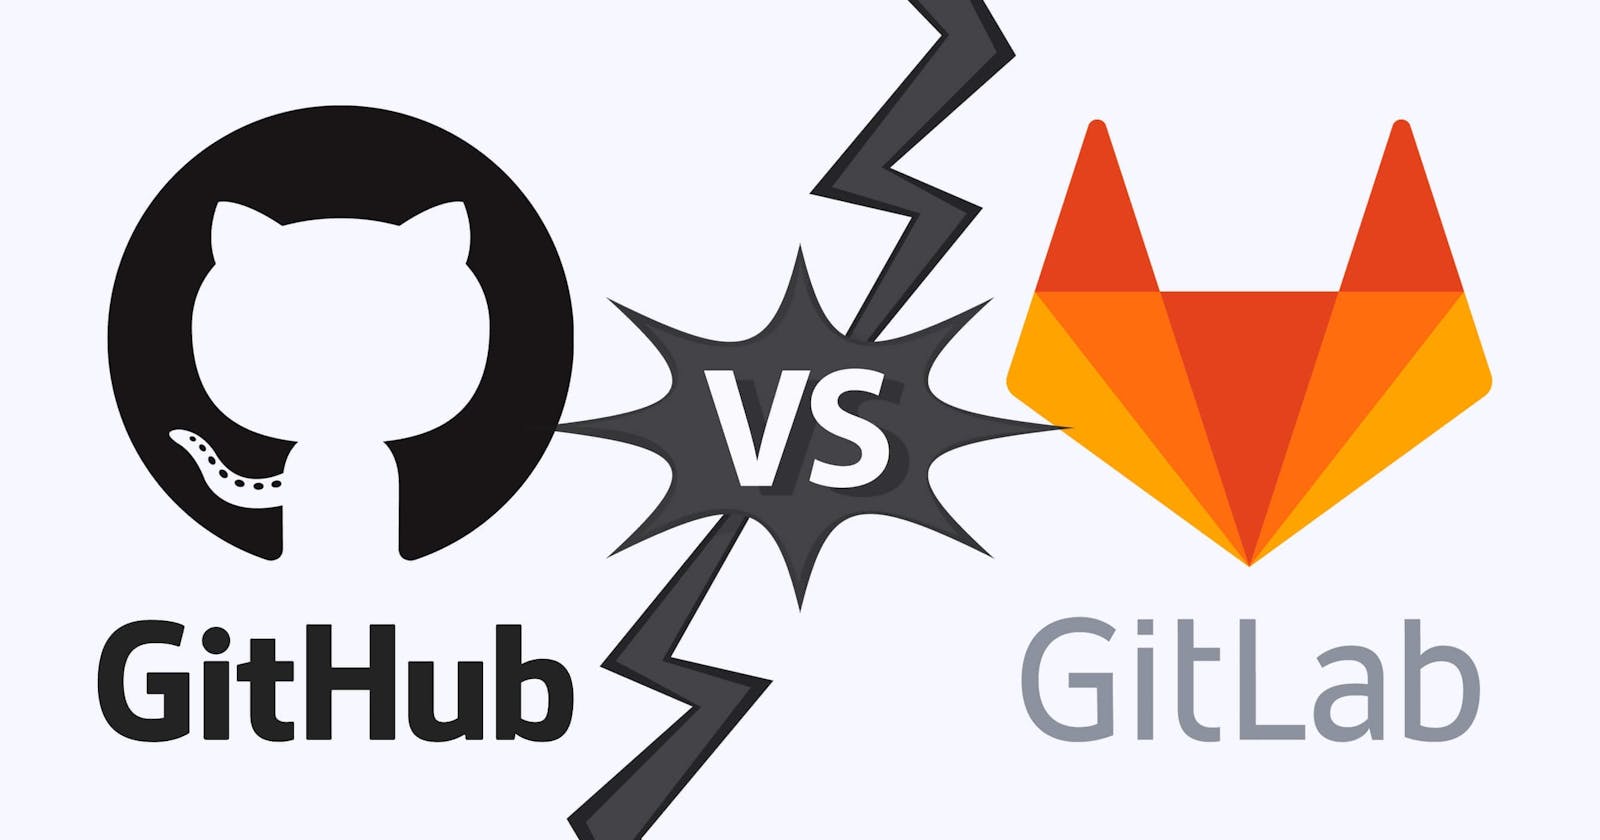 Github vs Gitlab